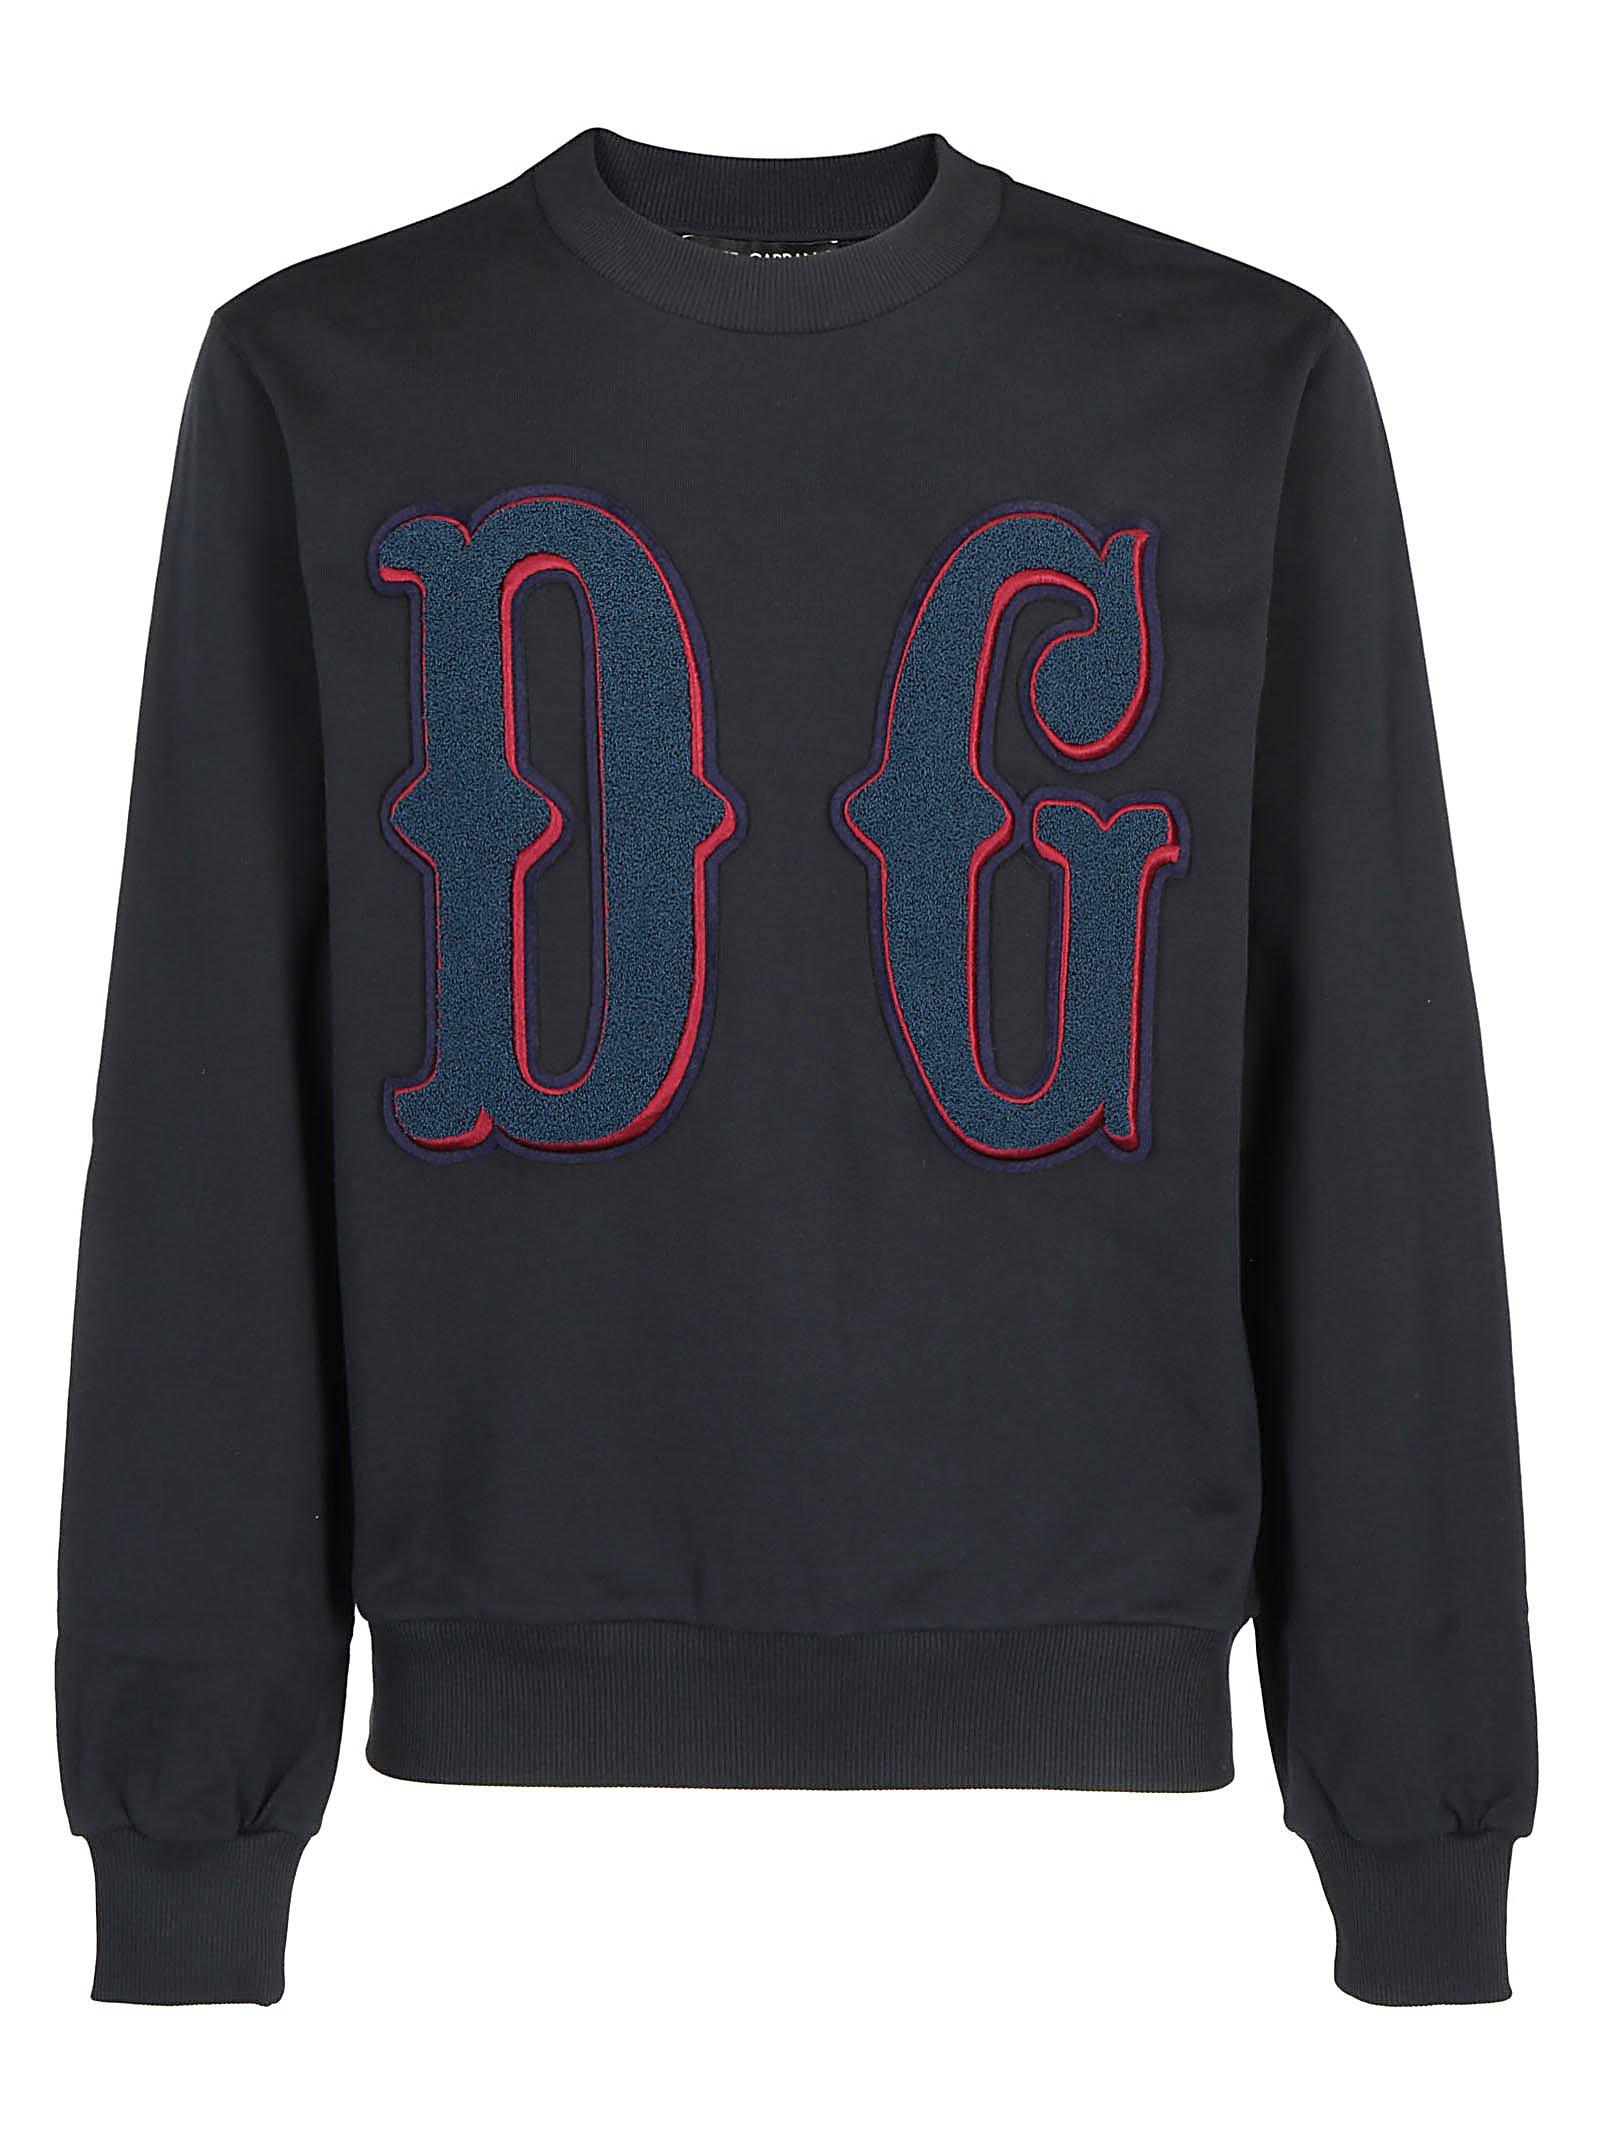 Dolce & Gabbana Cotton Logo Patch Sweatshirt in Blue for Men - Lyst